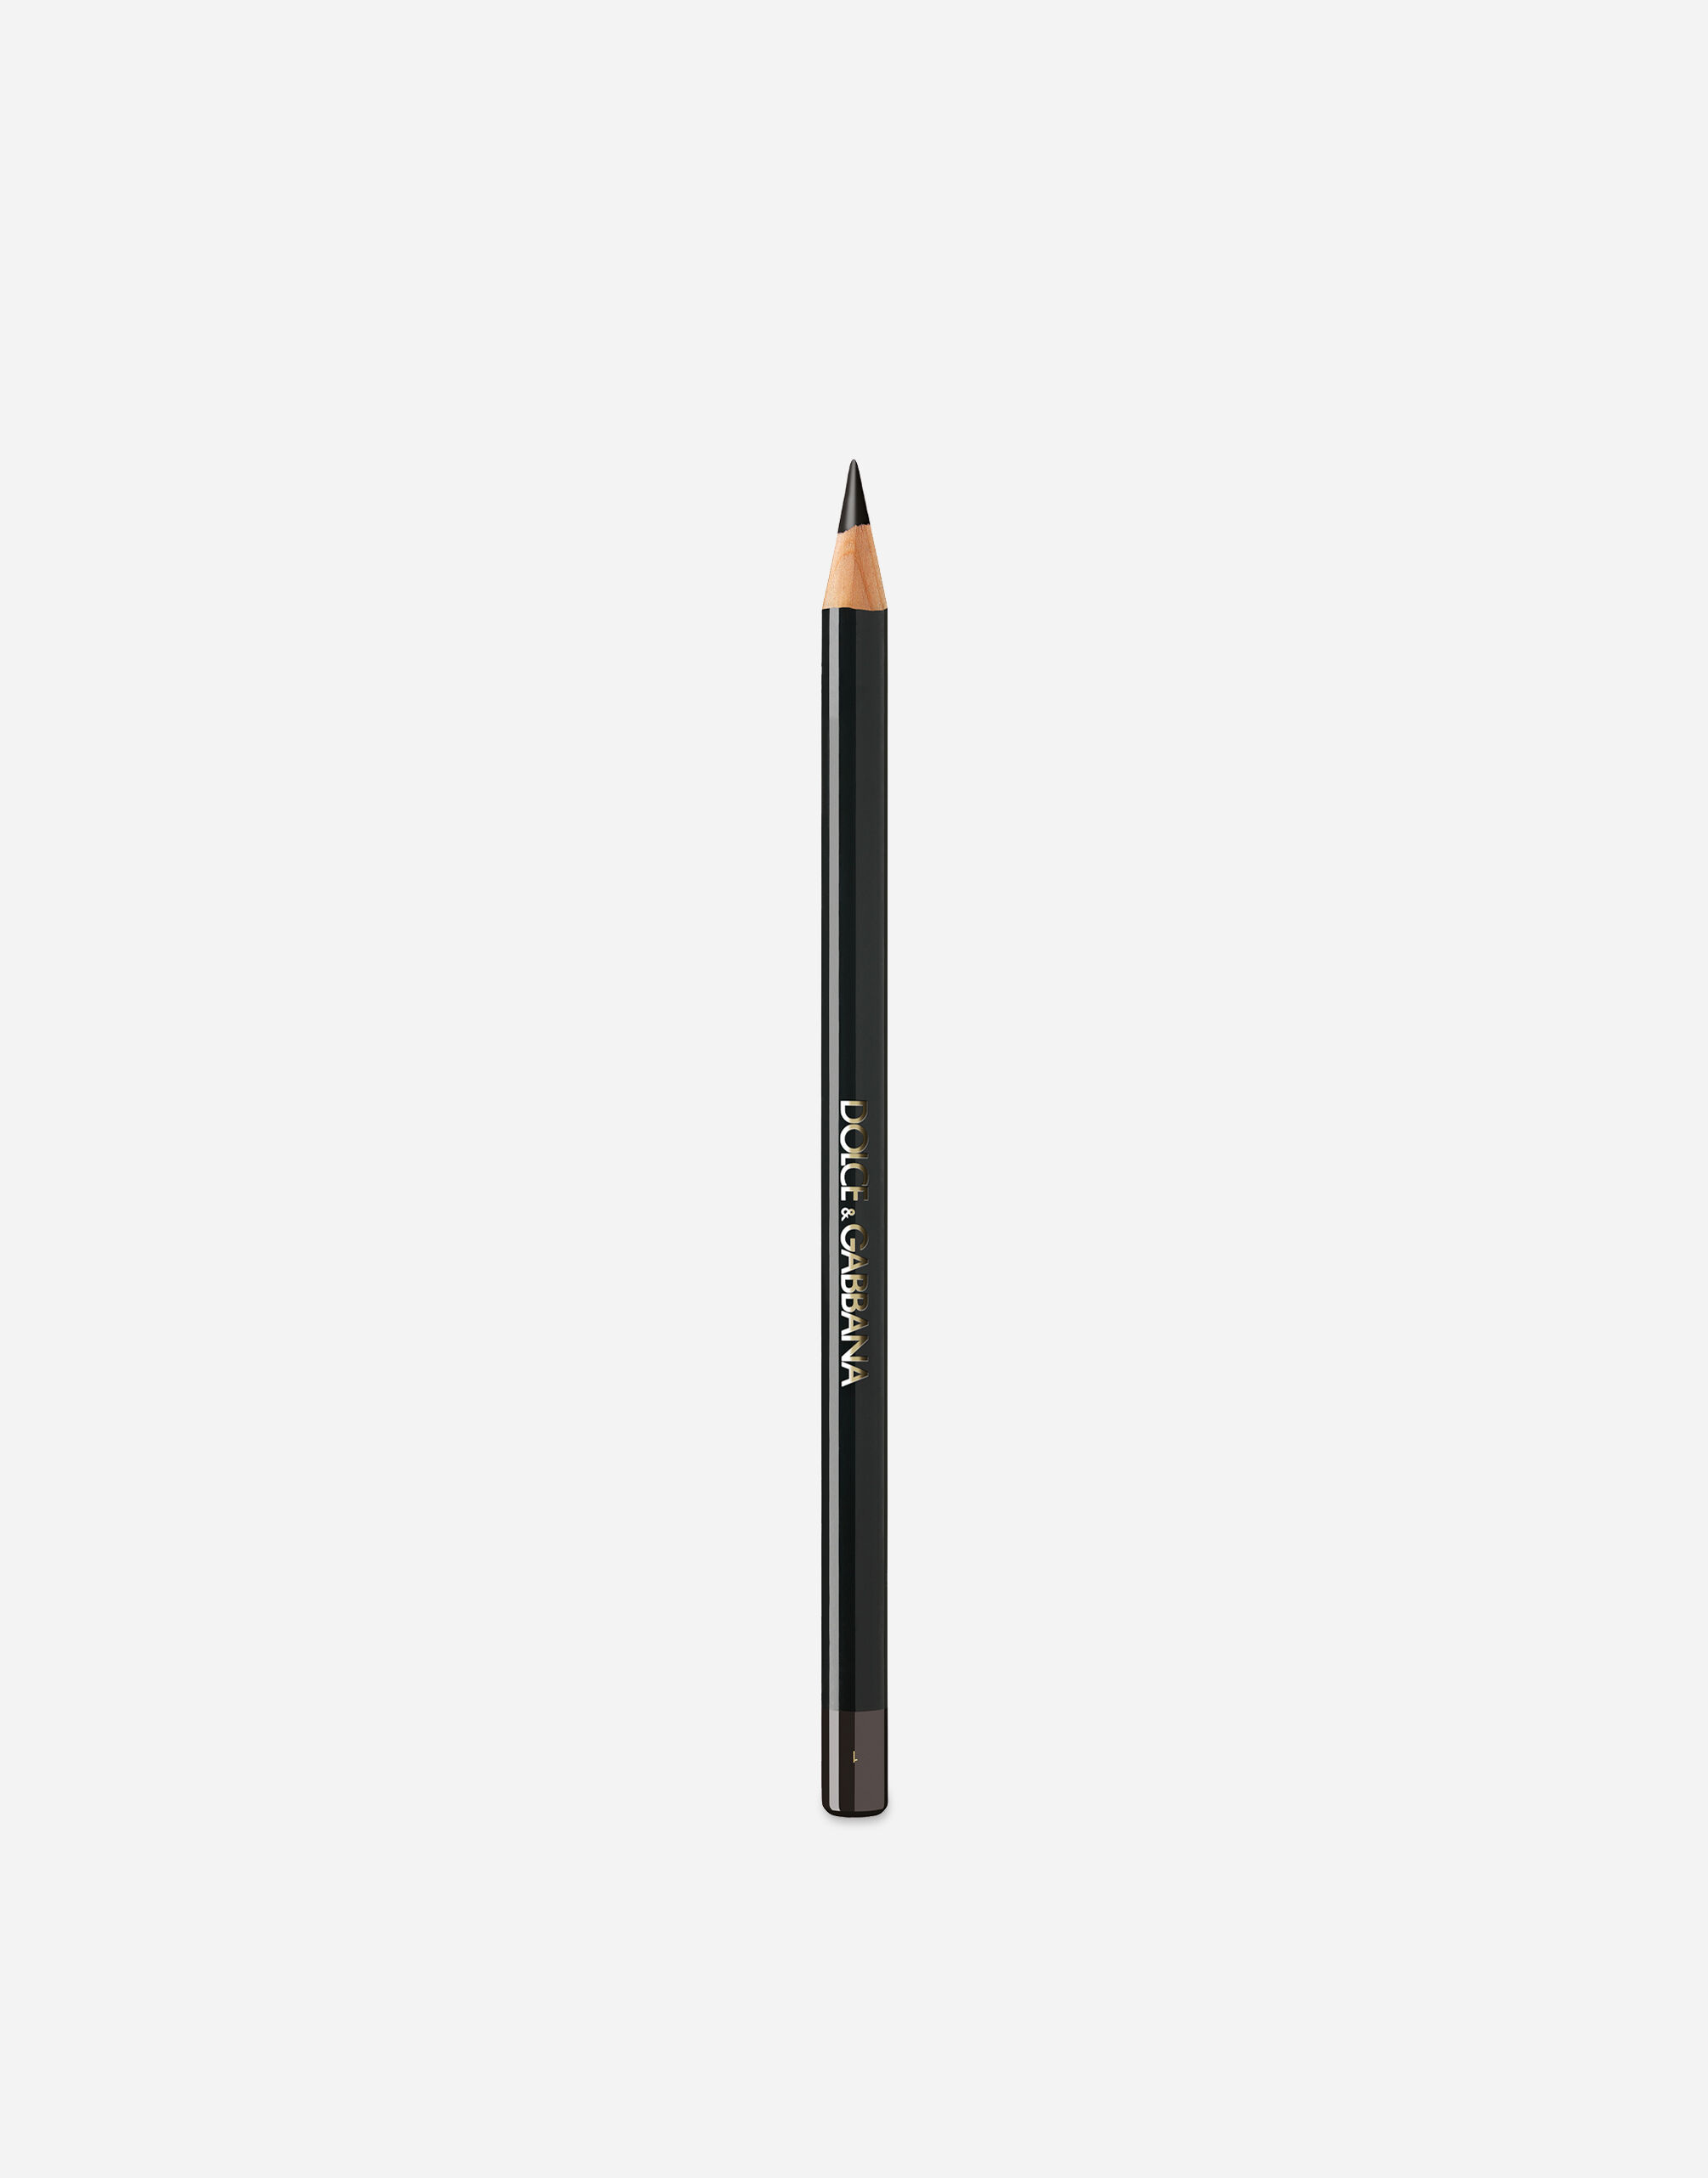 Карандаш-кайал для глаз DOLCE & GABBANA Khol Pencil стойкий, тон 1 True Black, 2,04 г карандаш для глаз lovely eye pencil водостойкий тон